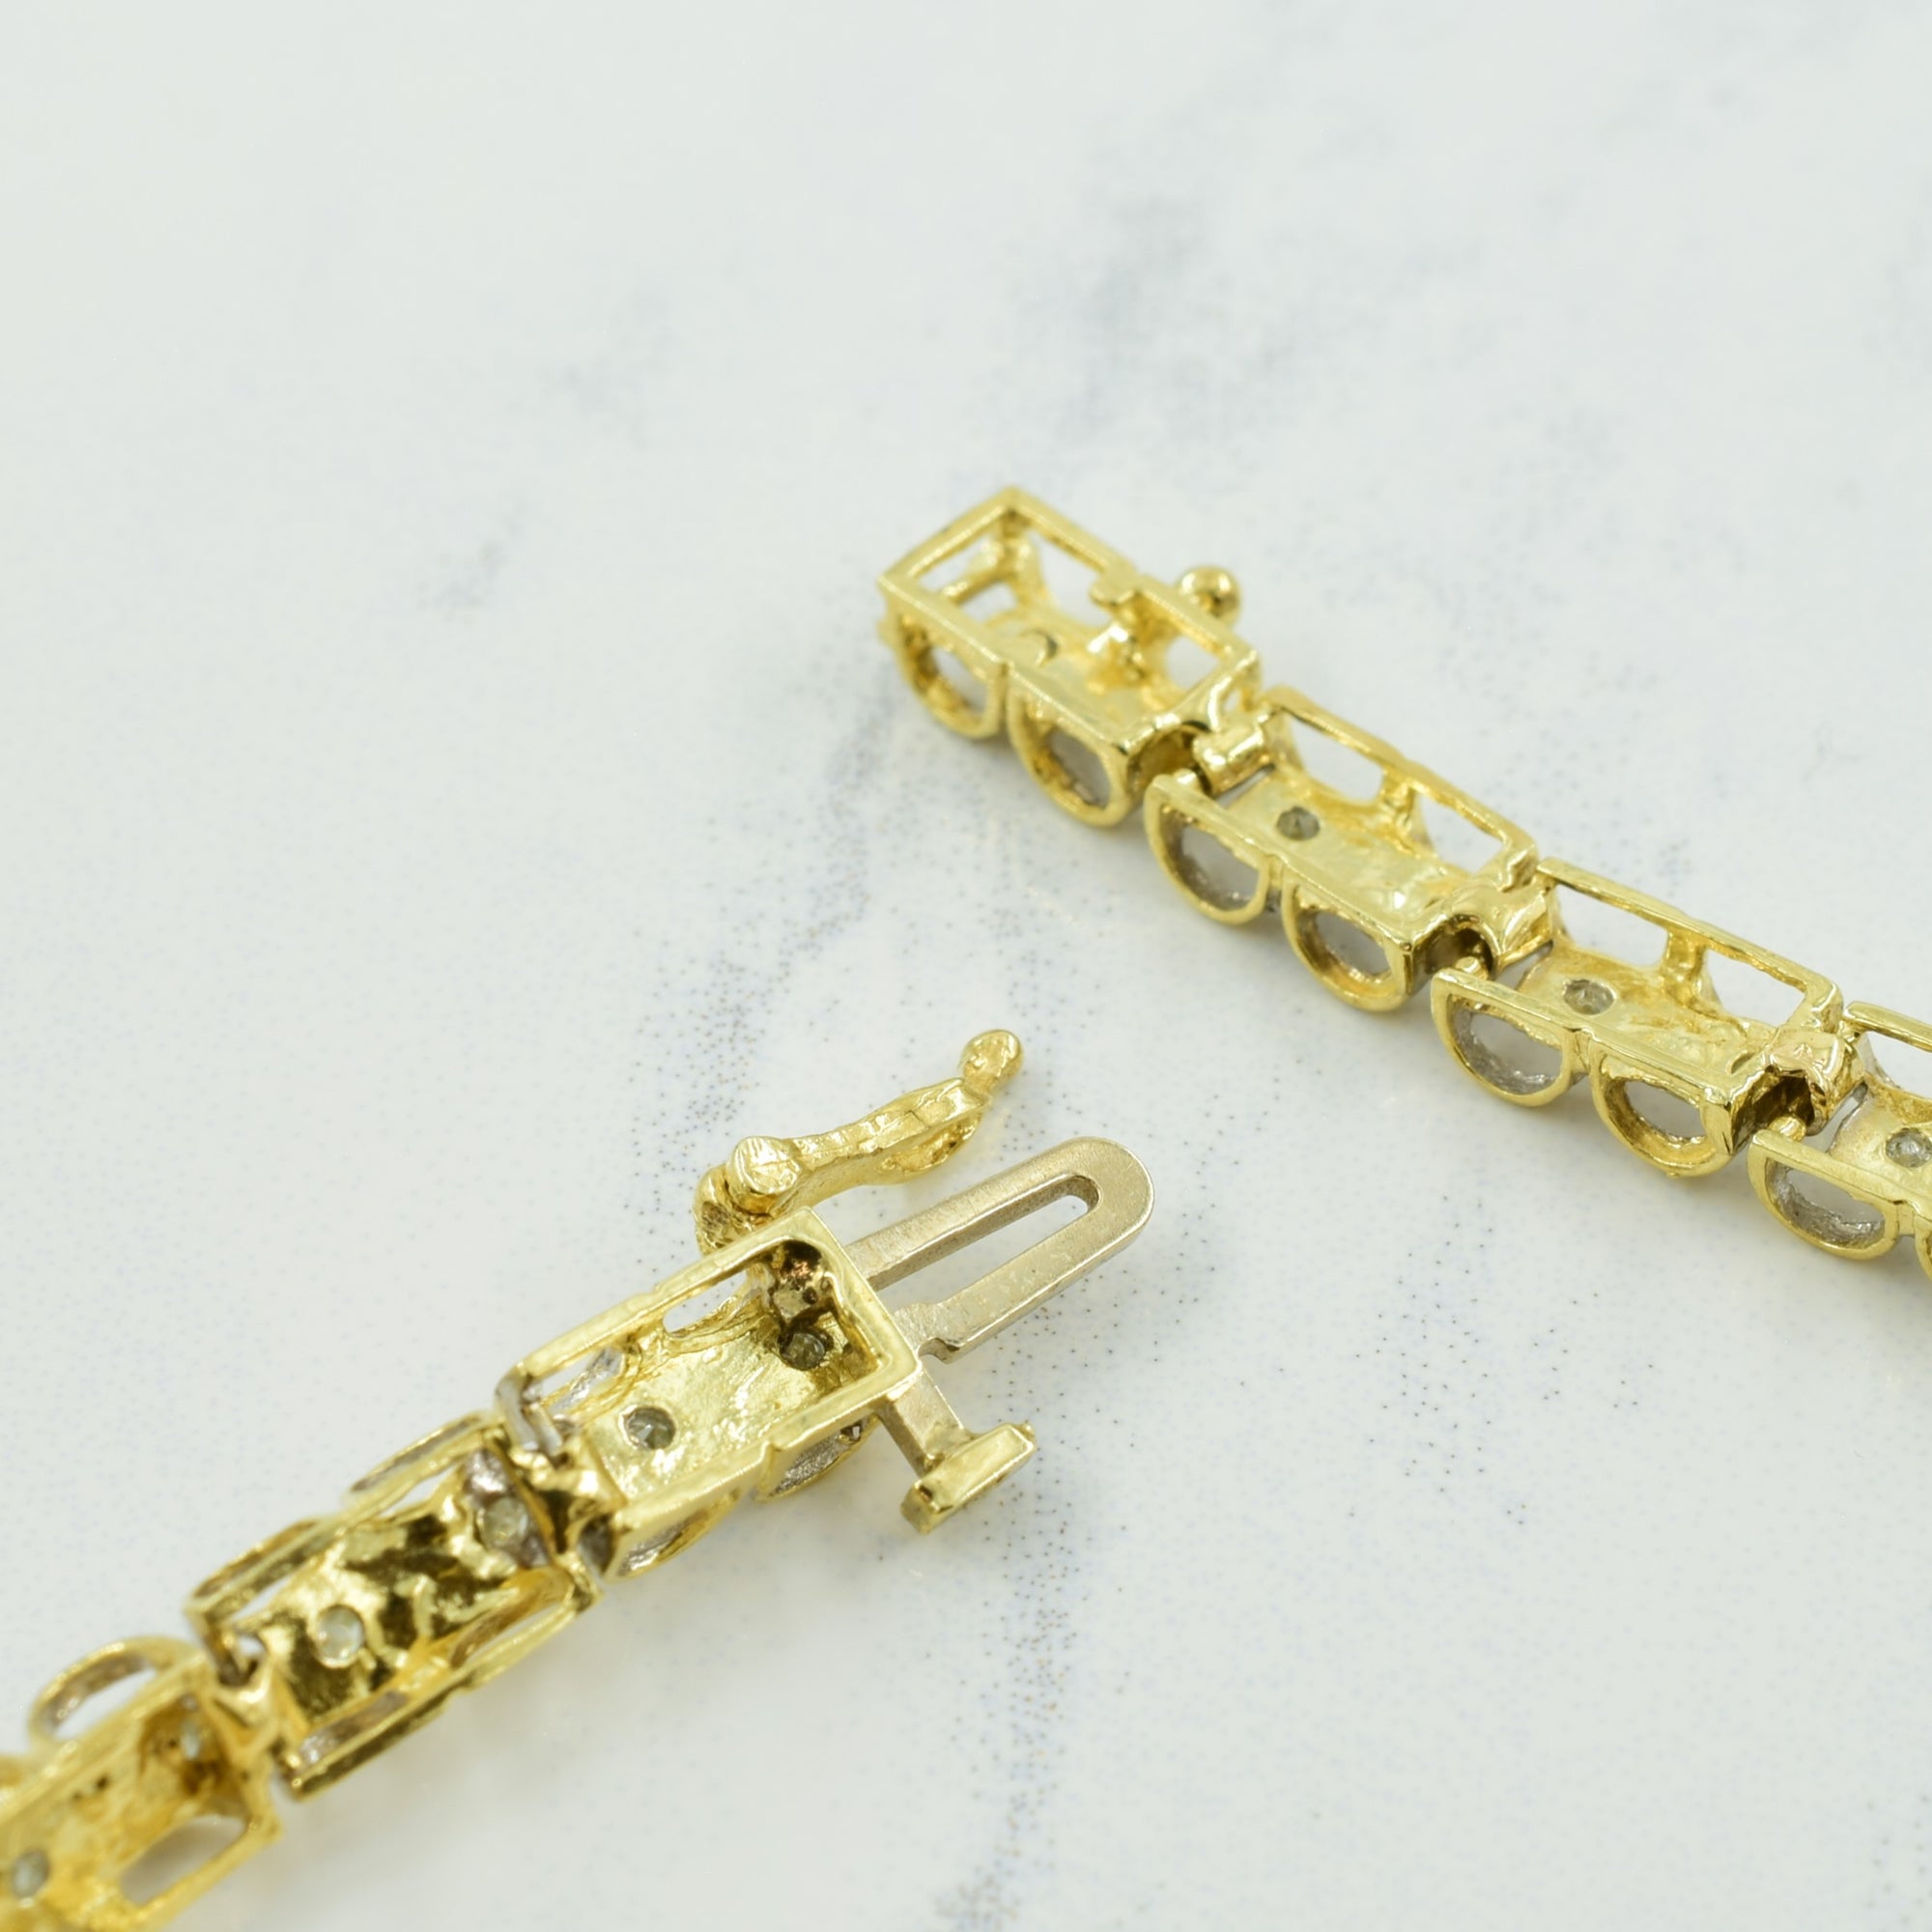 Two Tone Gold Diamond Bracelet | 0.50ctw | 7